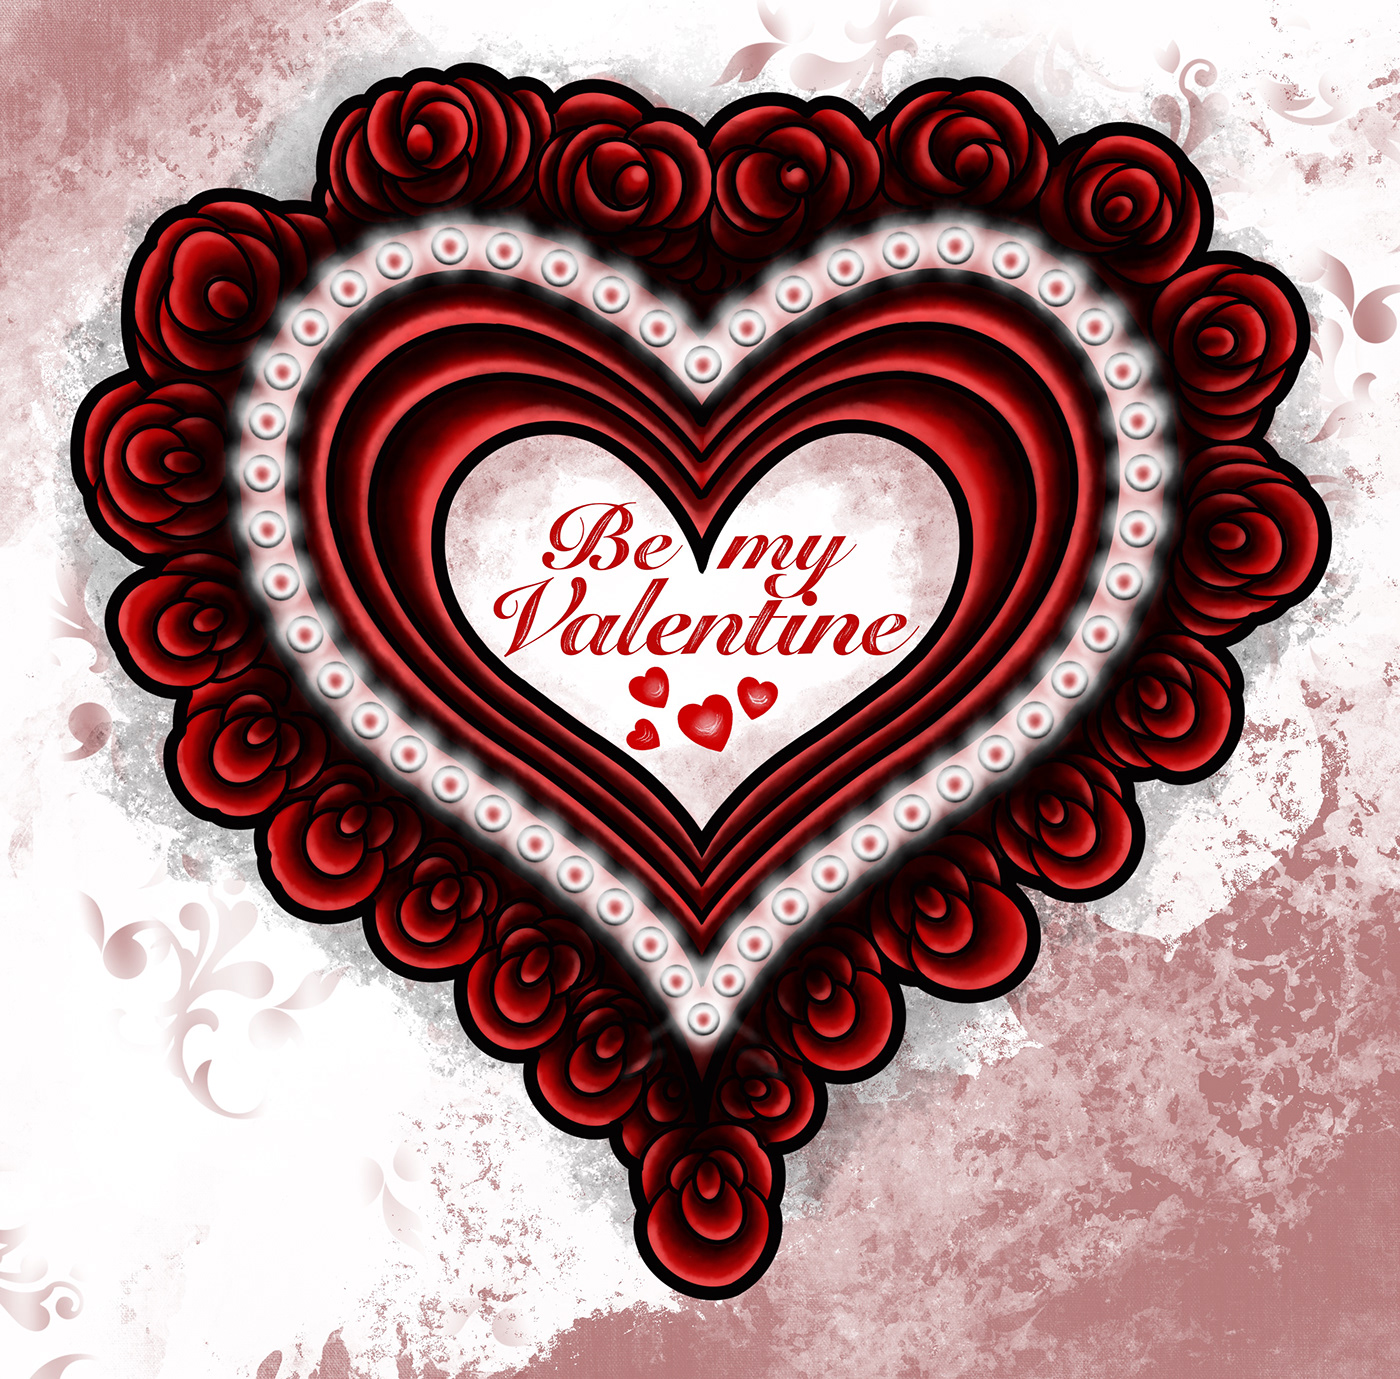 heart Love love heart romance romantic rose Roses valentine valentines